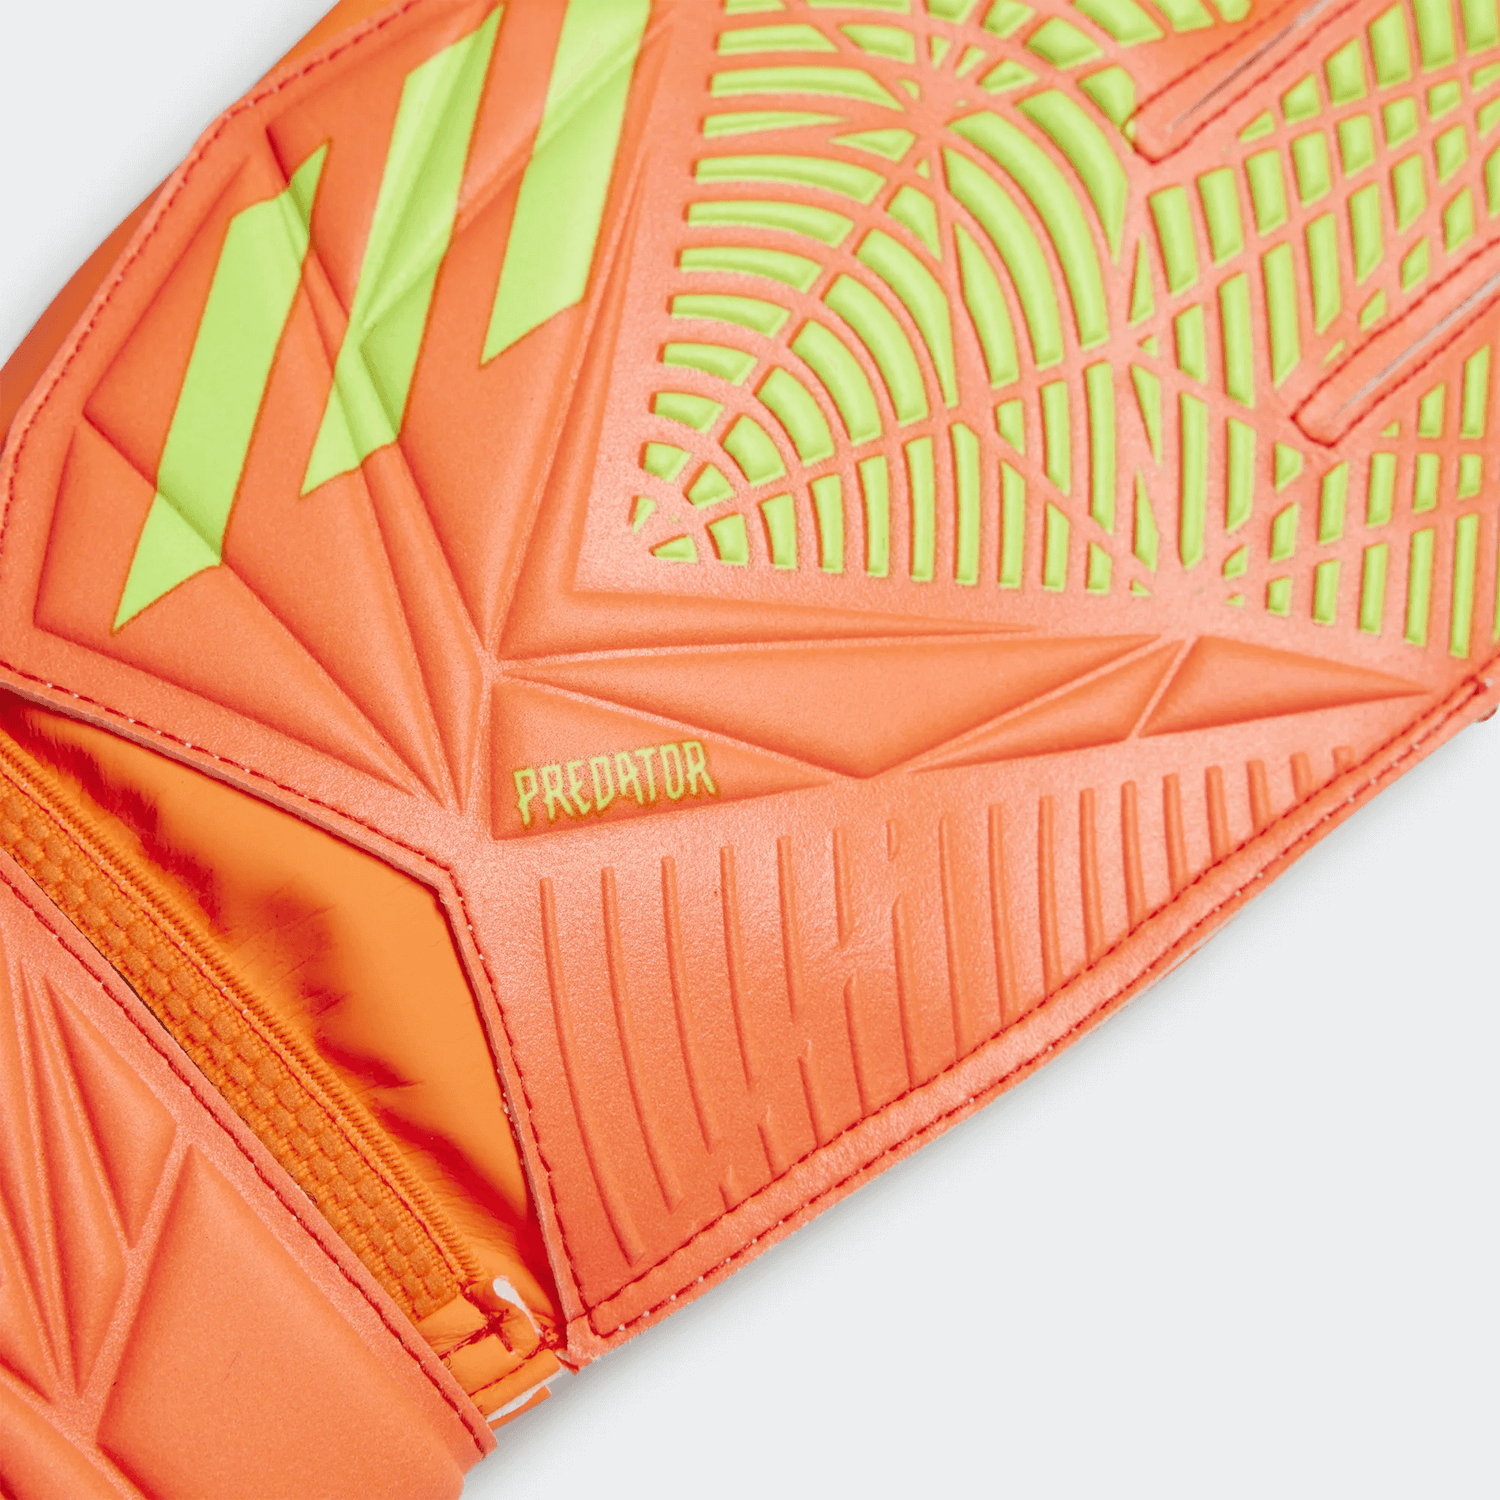 adidas Predator GL Goalkeeper Training Gloves - Solar Red-Solar Green (Detail 2)